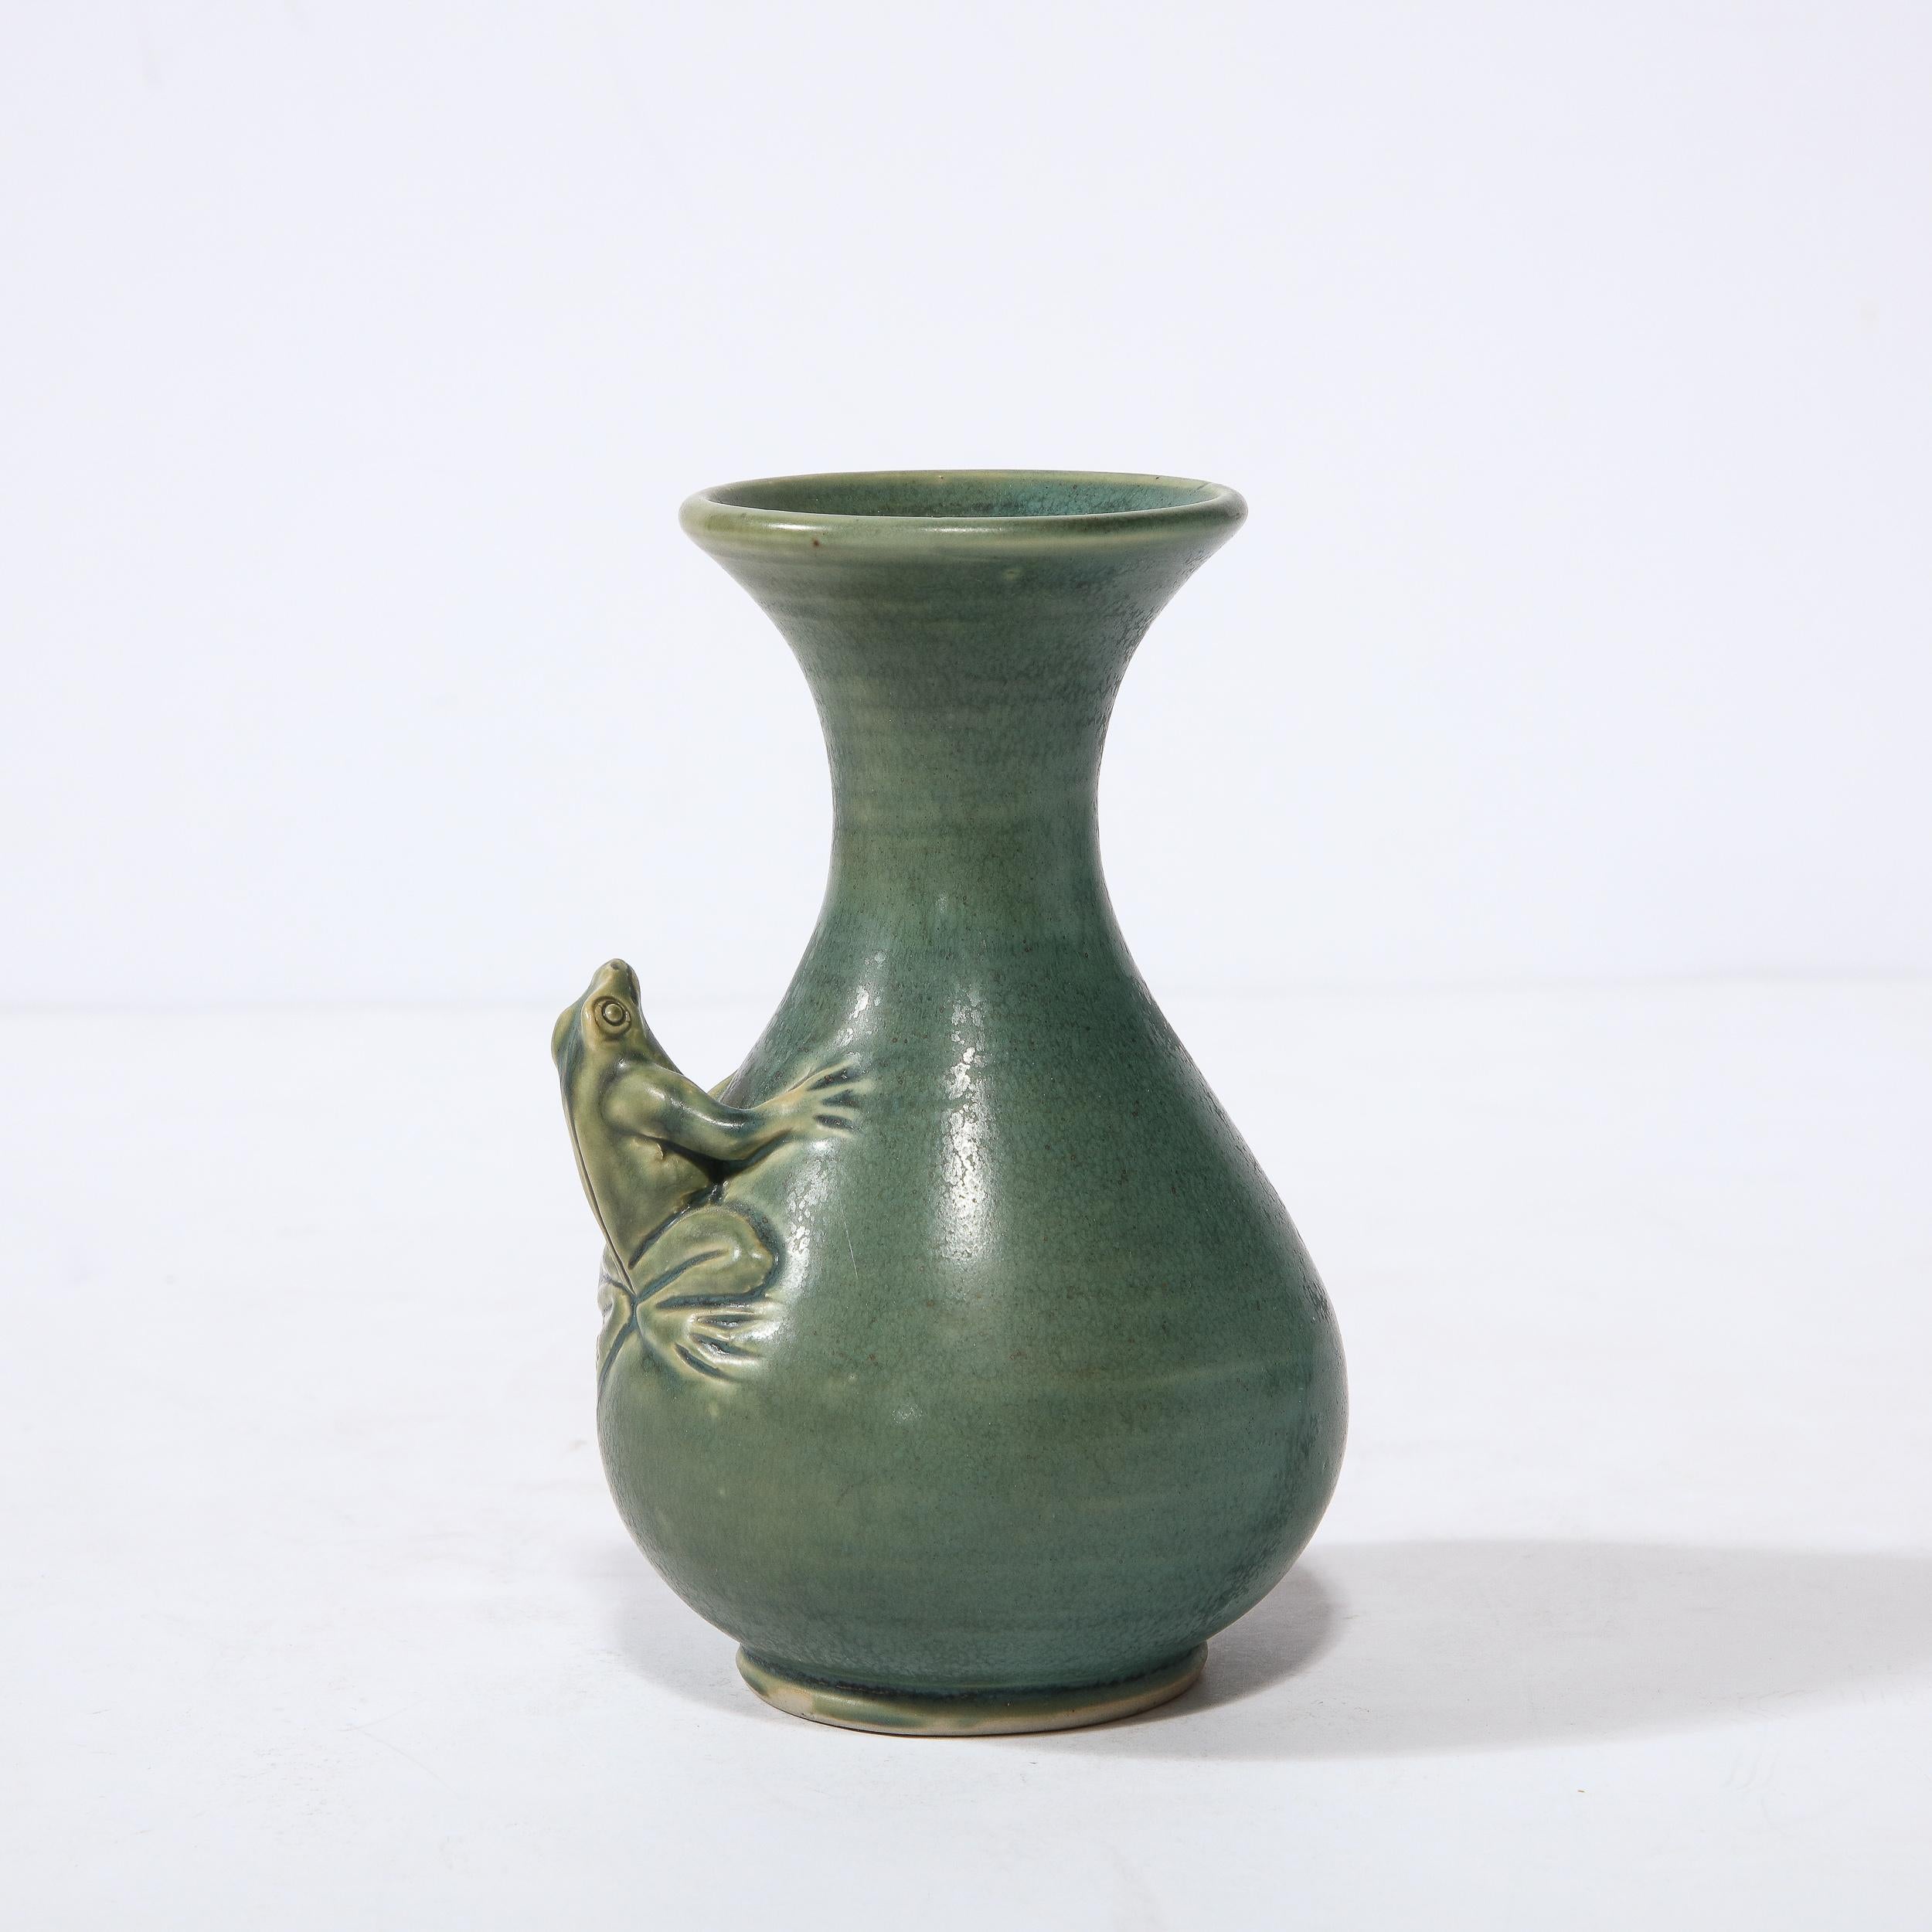 Modernist Sculptural Muted Jade Glazed Ceramic Vase with Frog Motif in Relief For Sale 2